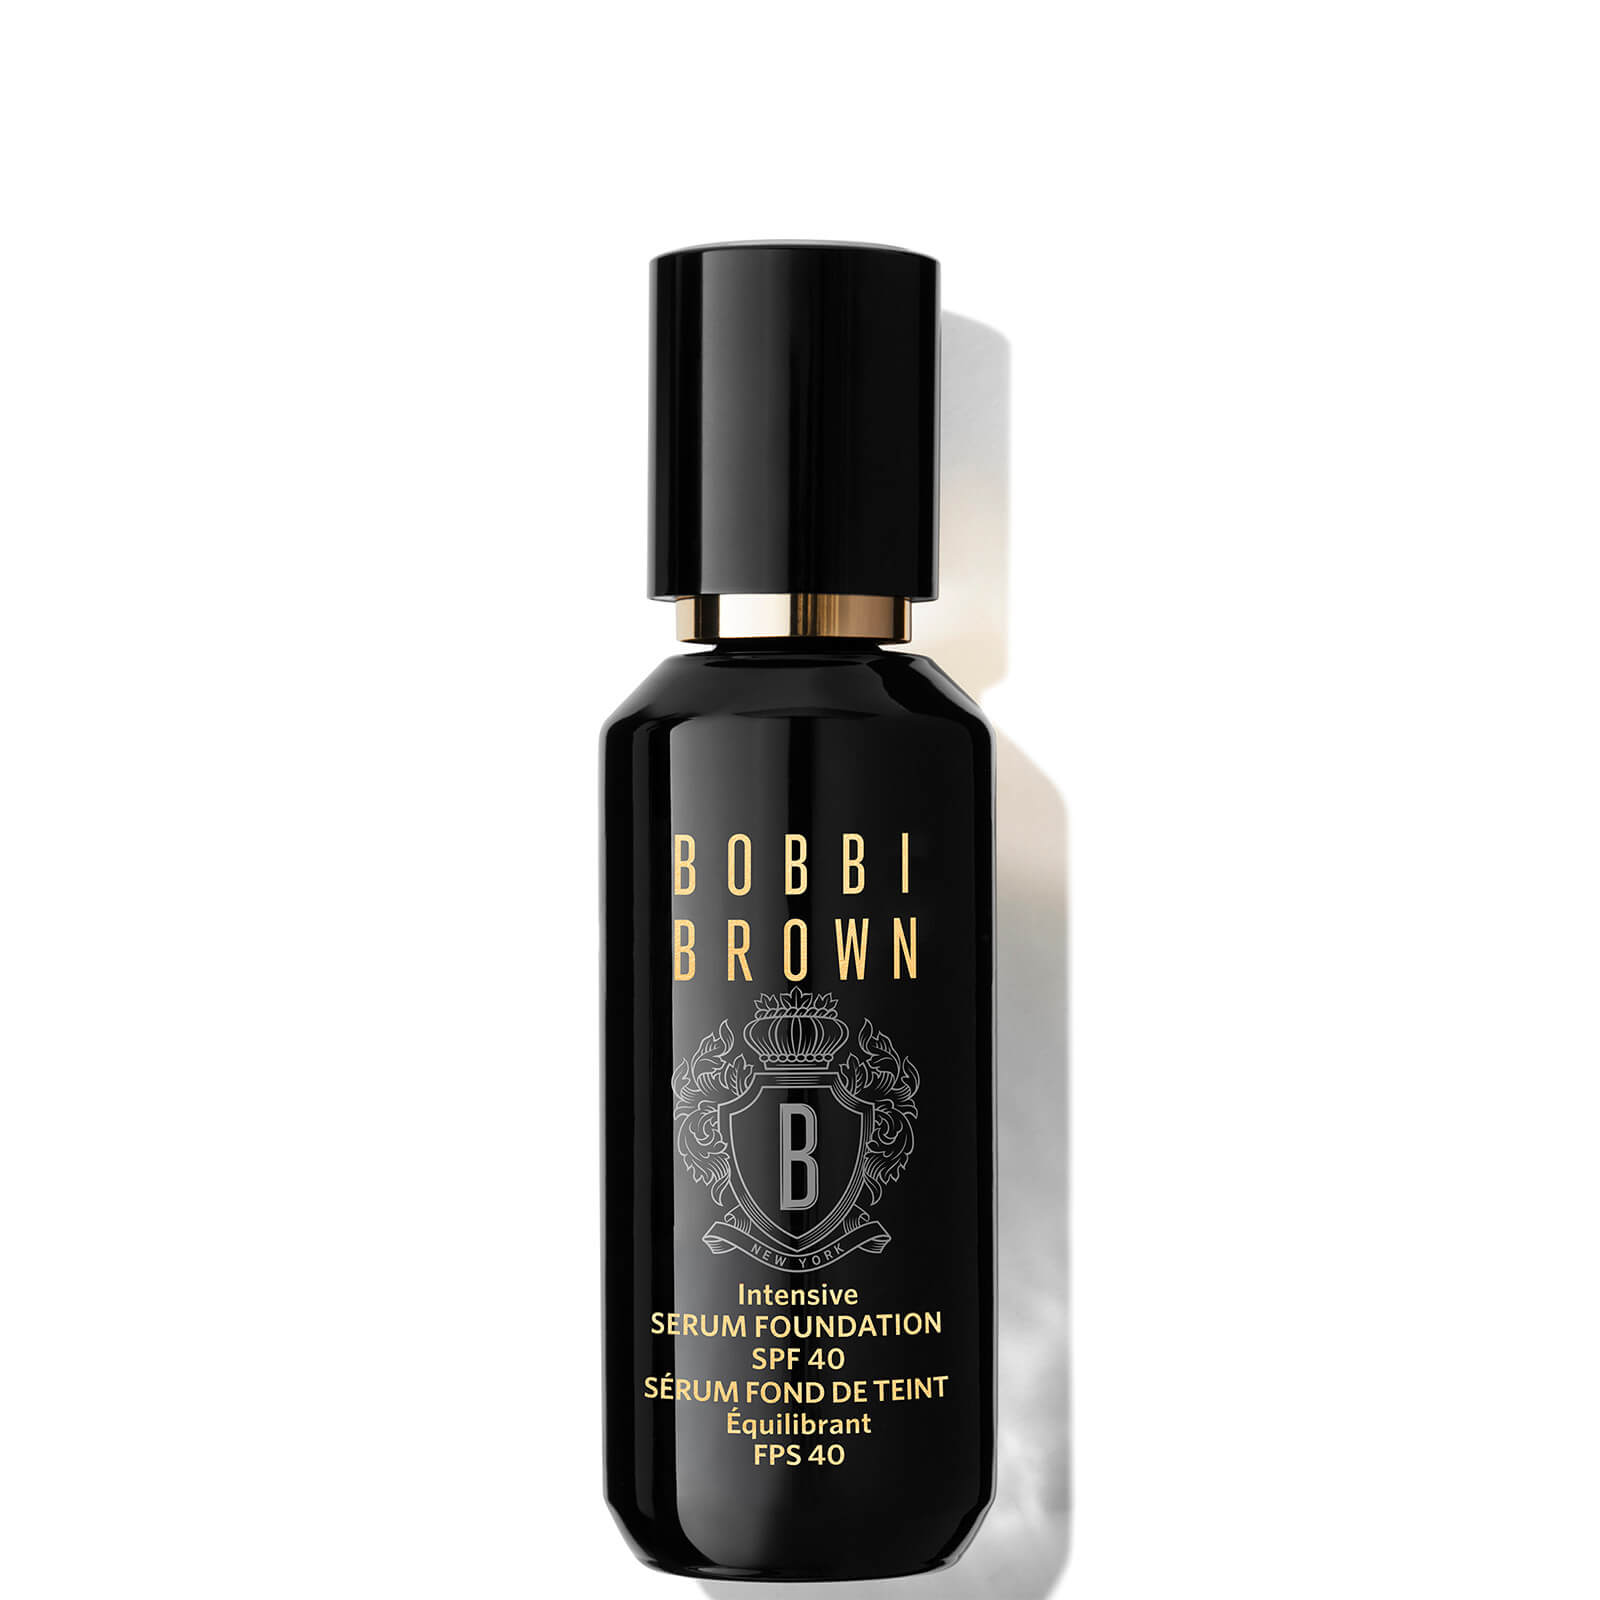 Bobbi Brown Intensive Serum Foundation SPF40 30ml (Various Shades) - Warm Honey